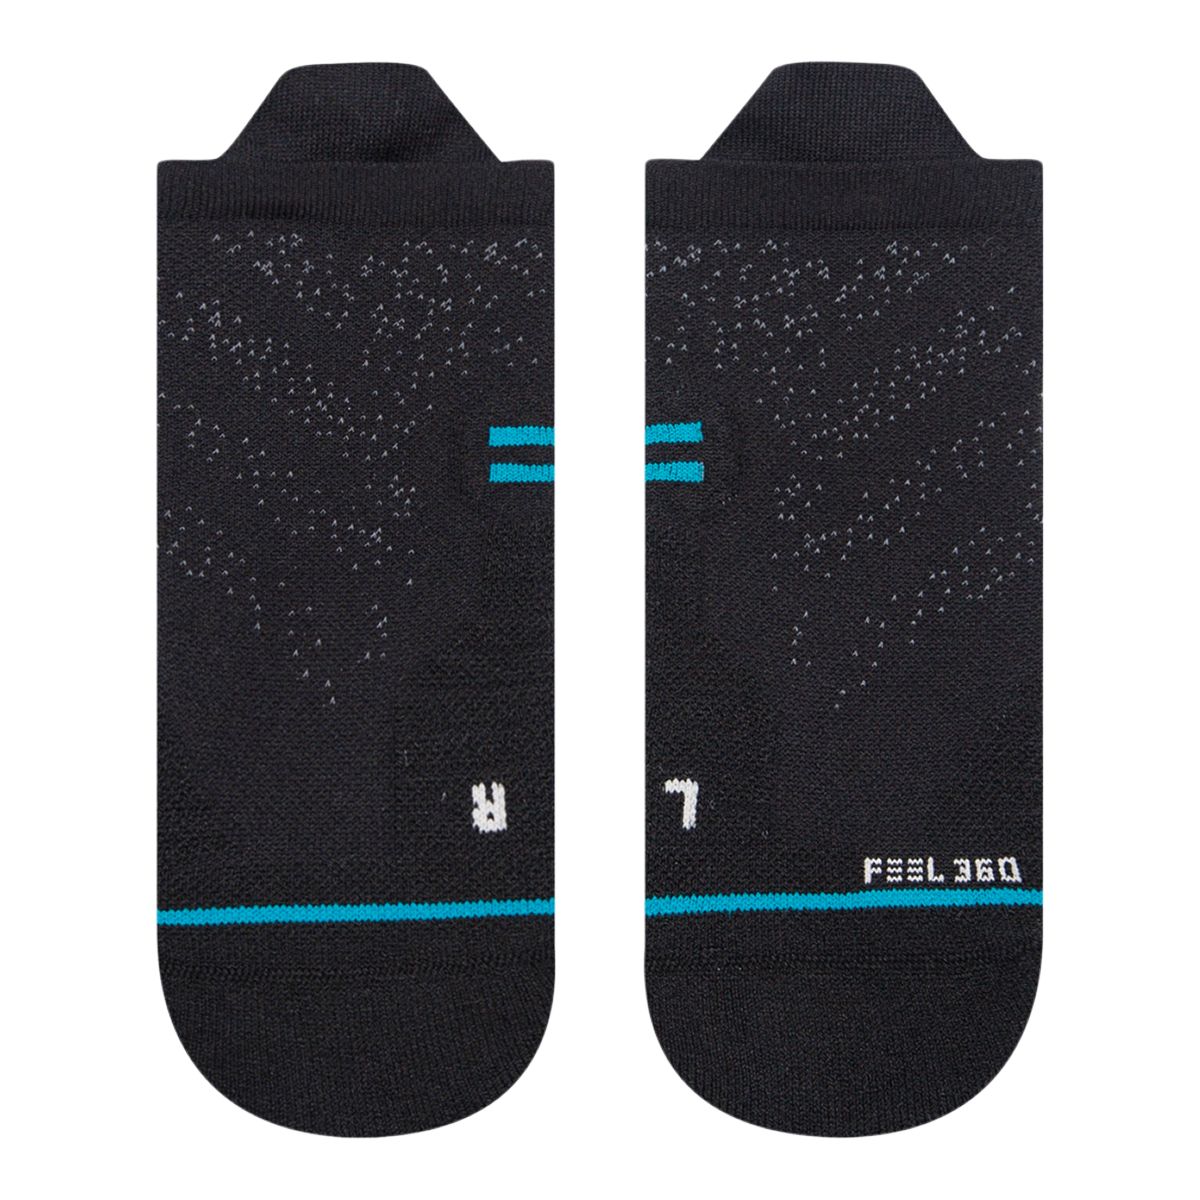 Image of Stance Men's Athletic Tab Socks